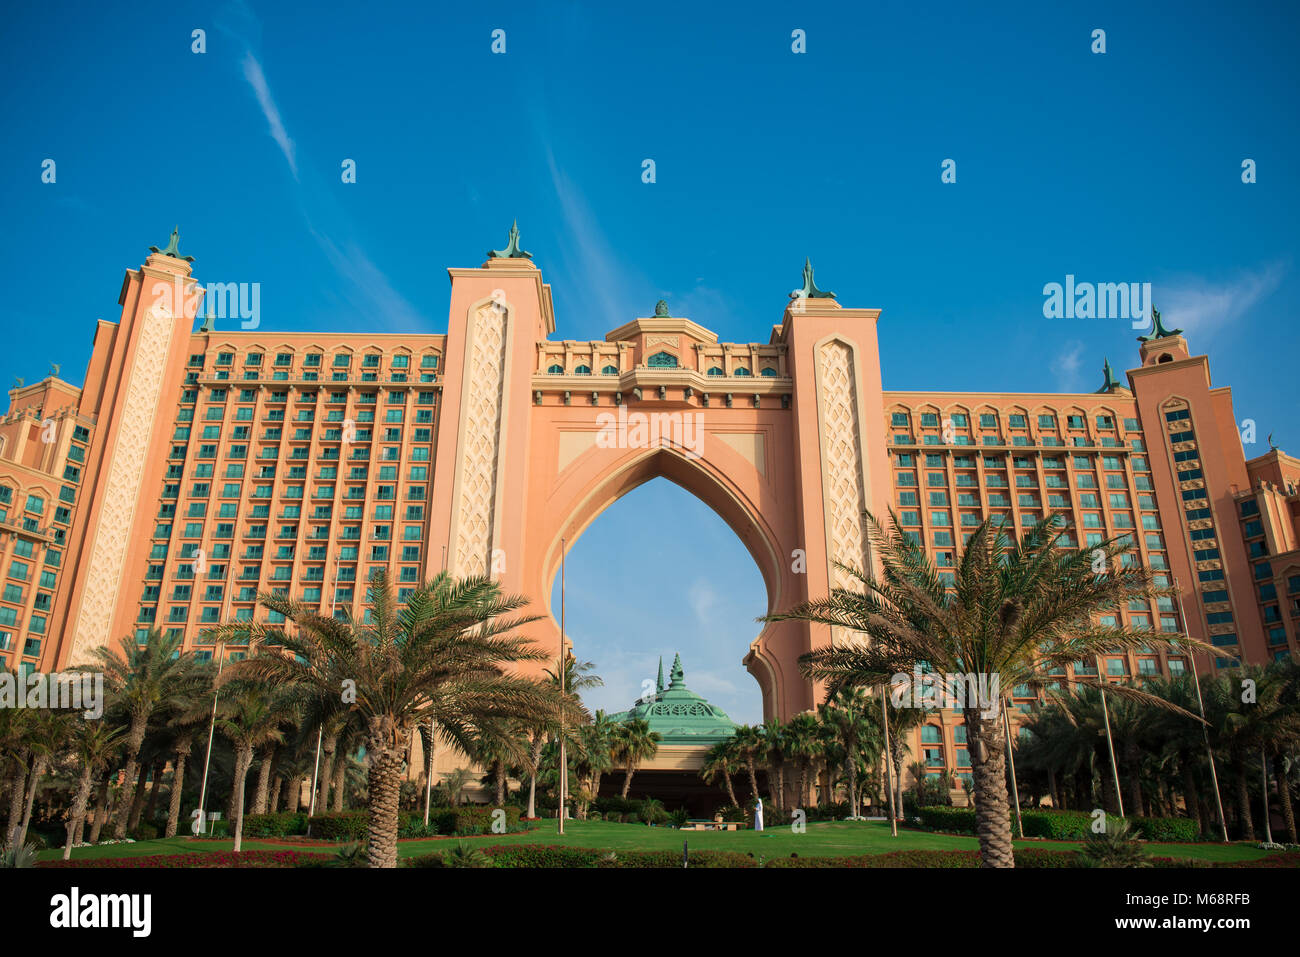 Atlantis The Palm Hotel Mit Palmen In Dubai Stockfotografie Alamy